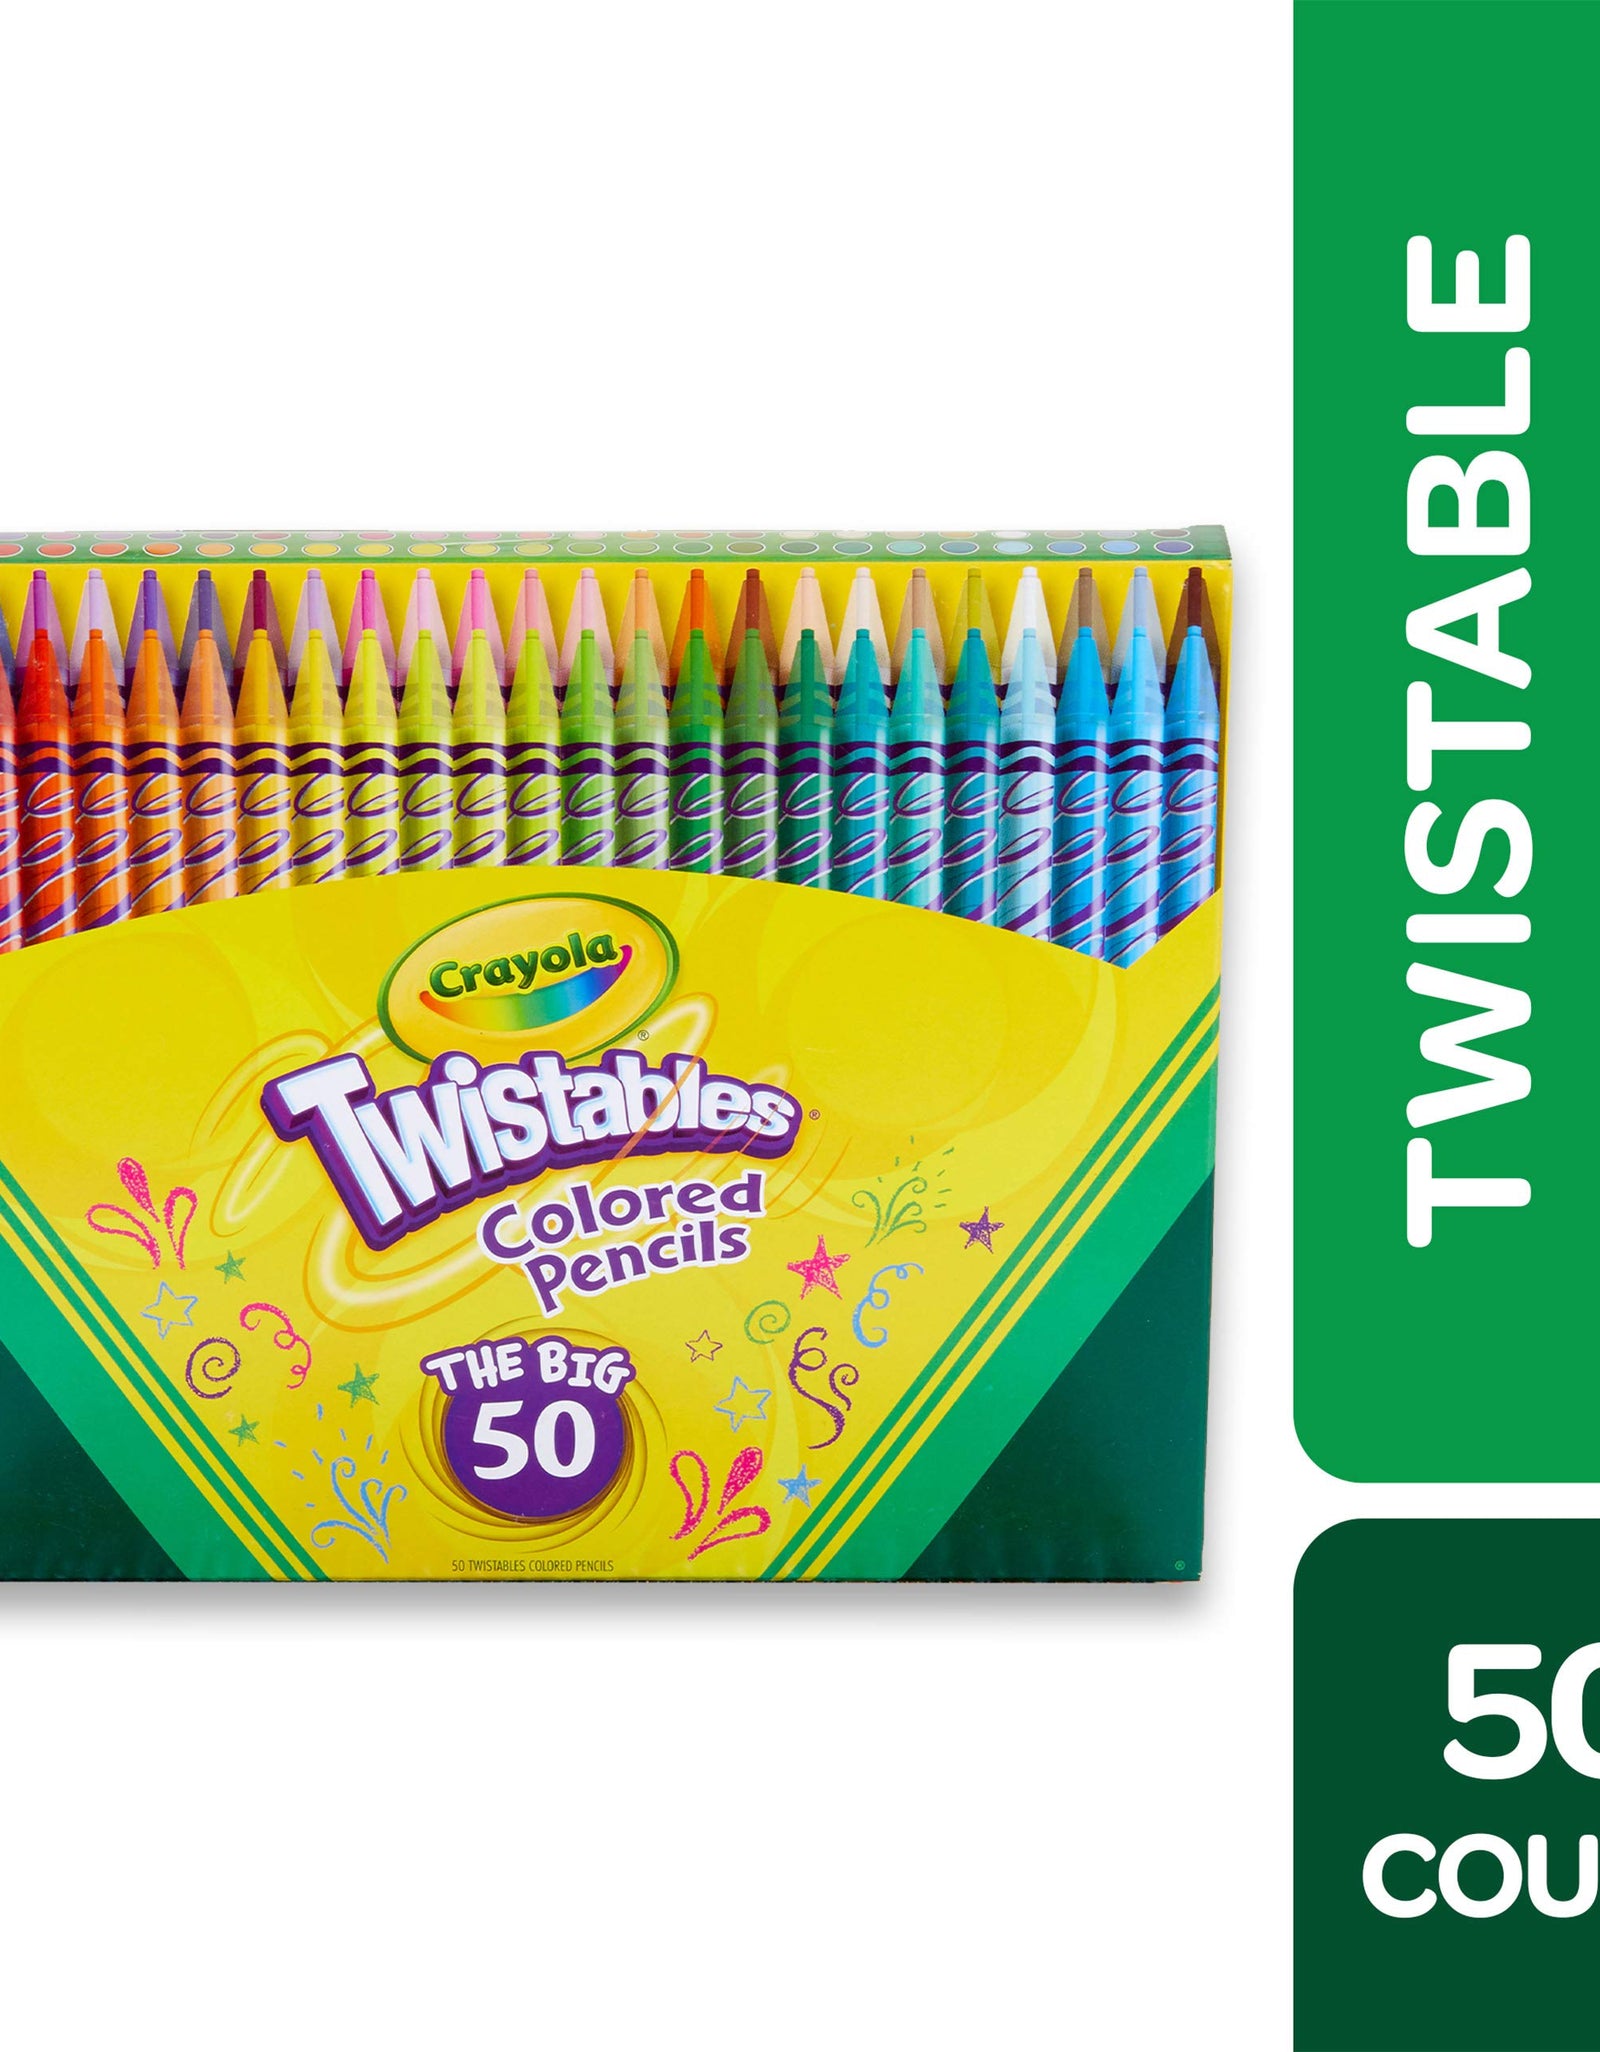 Crayola Twistables Colored Pencil Set, School Supplies, Coloring Gift,50 Count